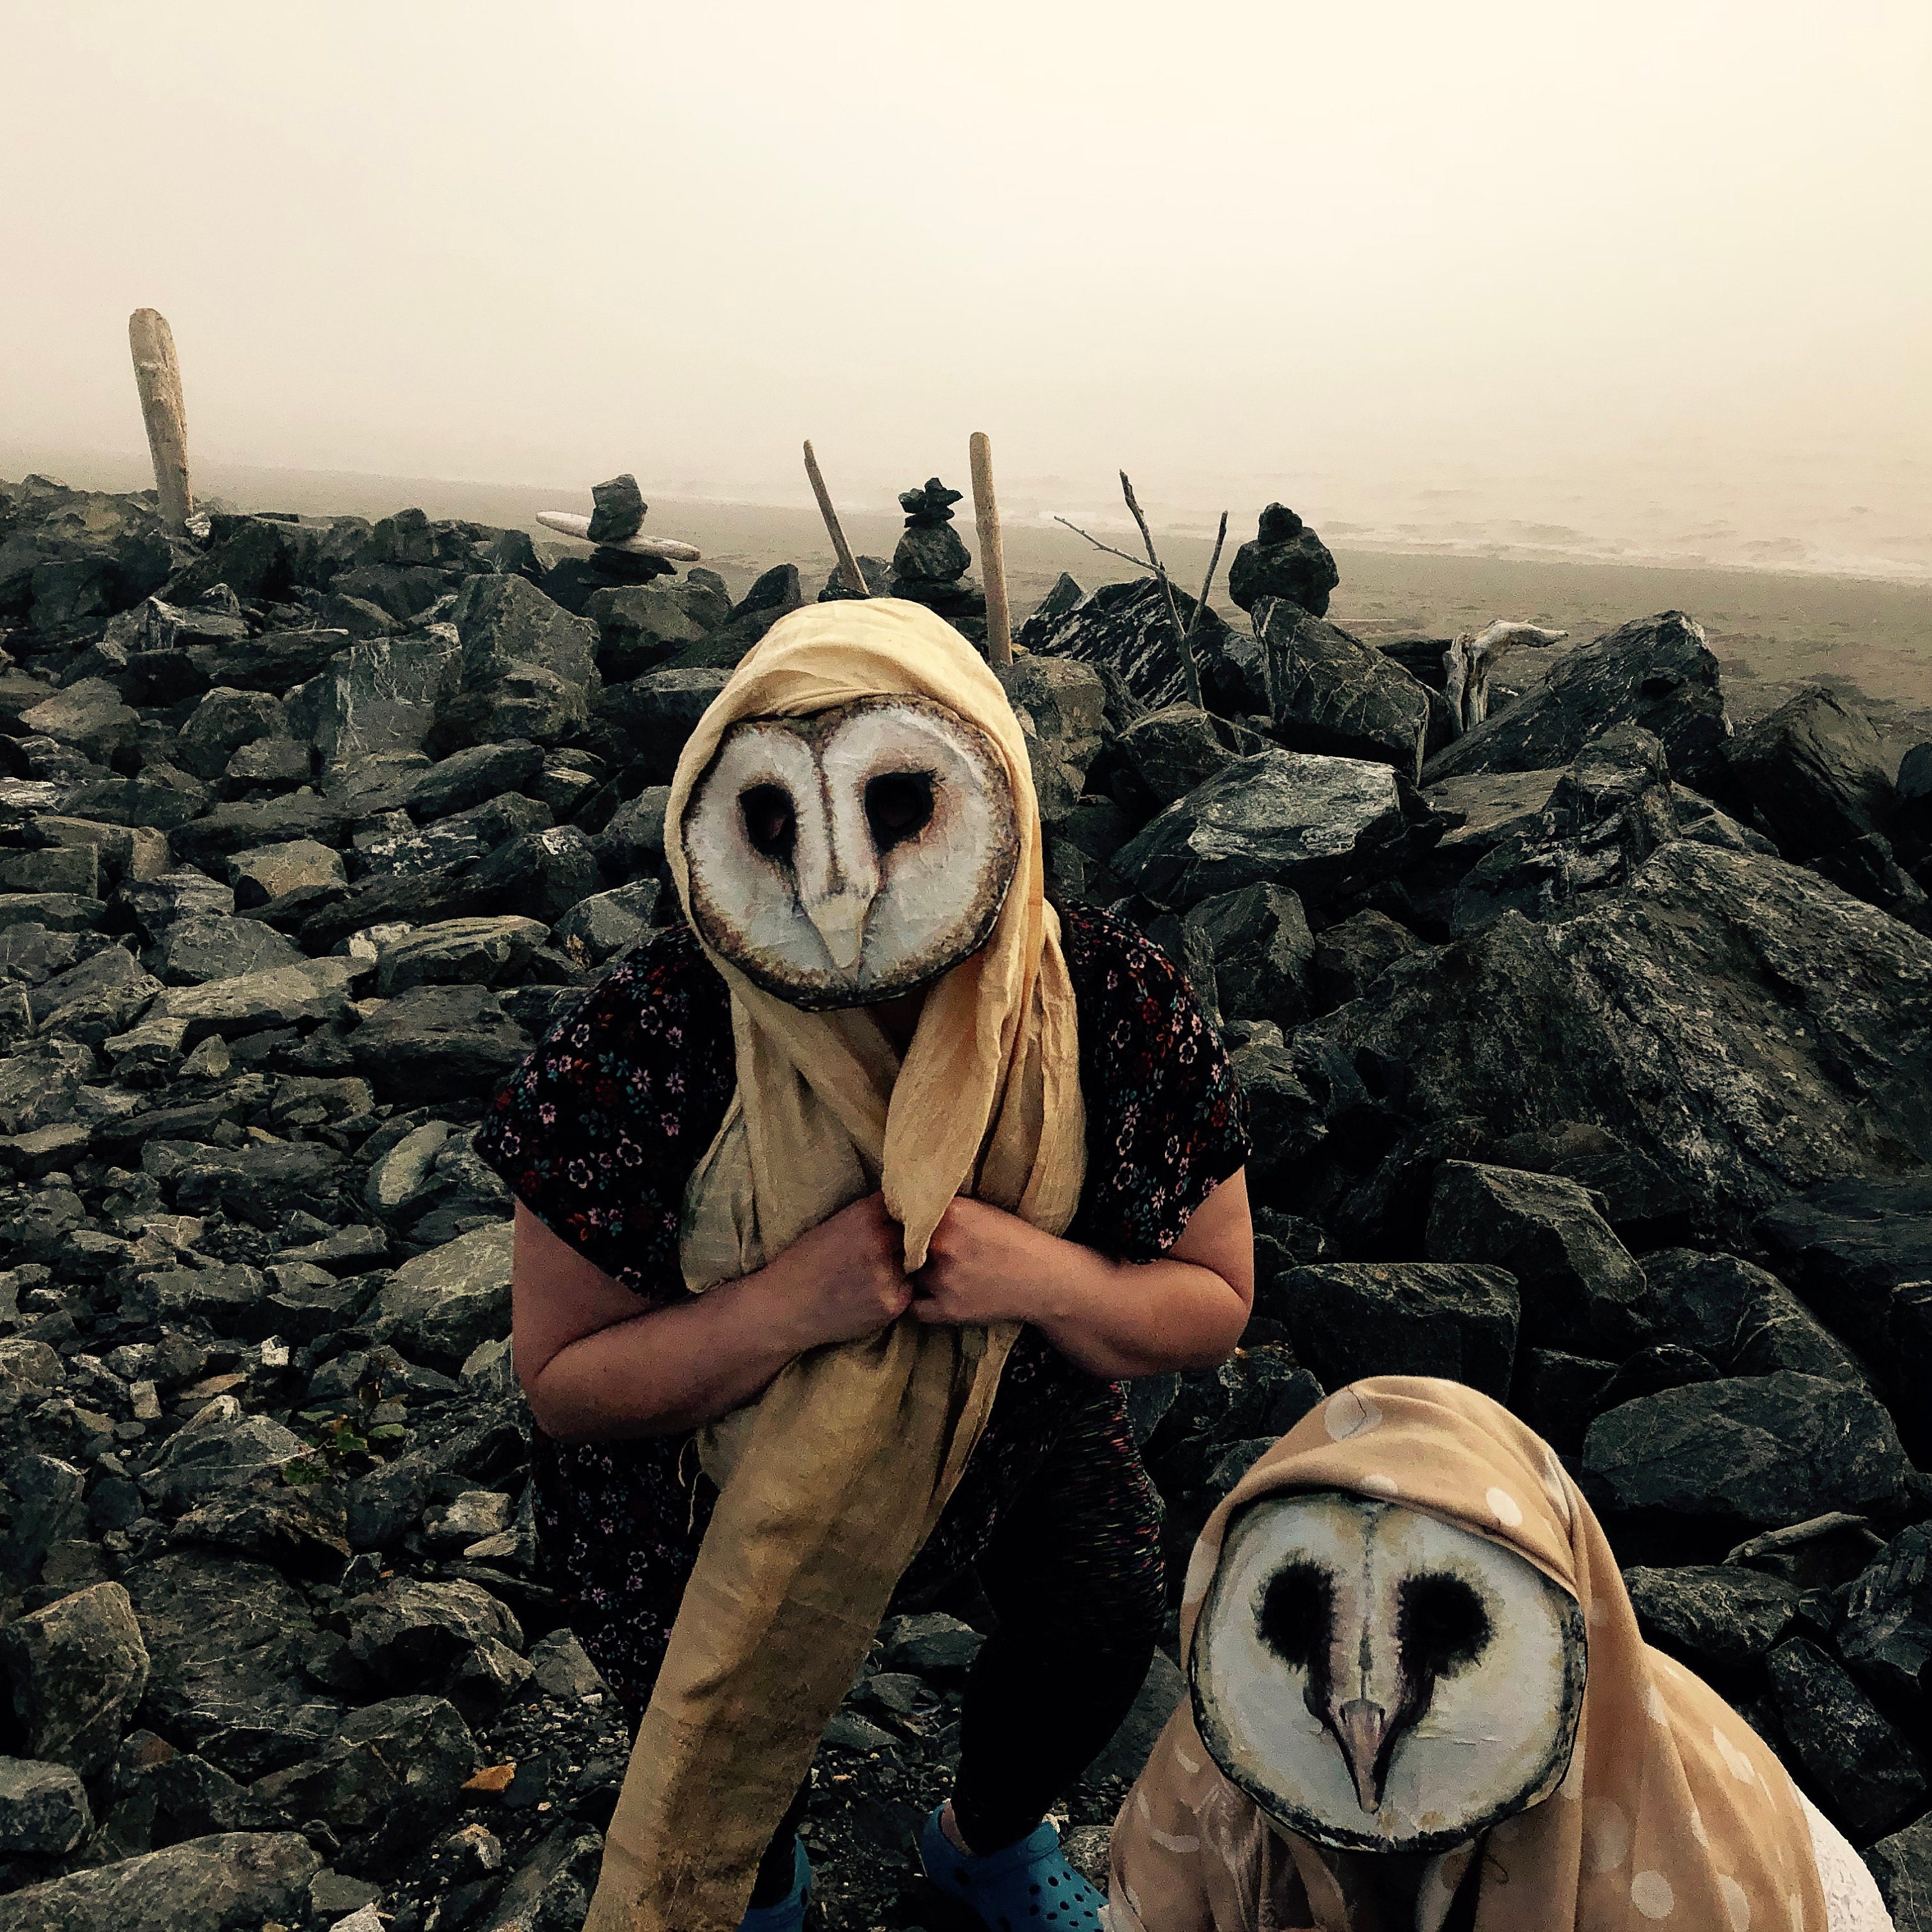 Barn Owl Masks for Halloween Costume Creepy Adult Masquerade